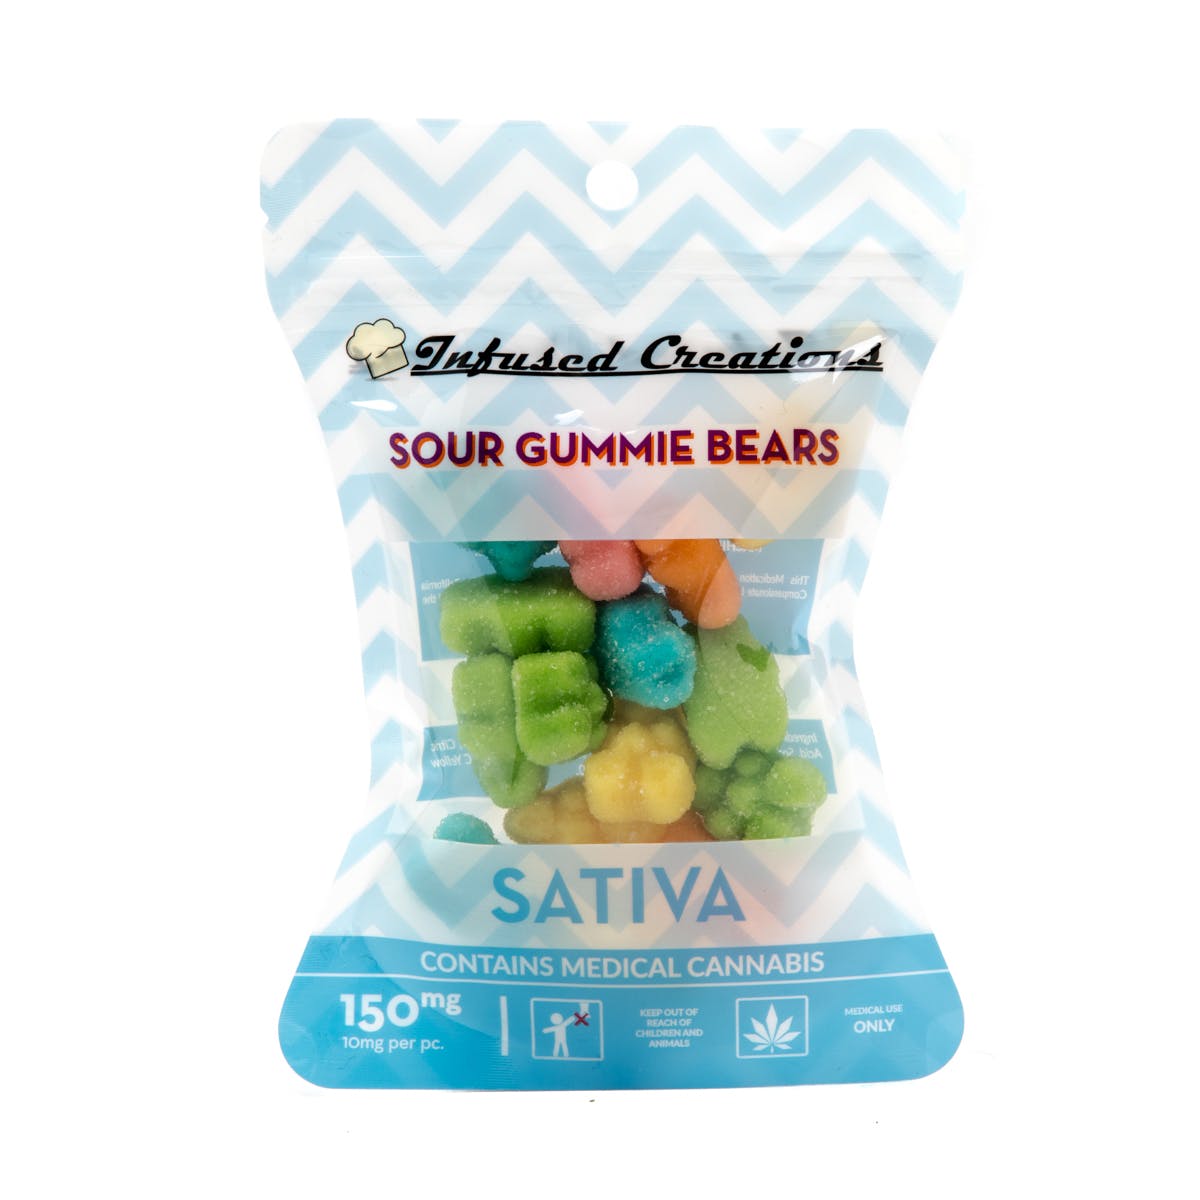 Sour Gummi Bears Sativa, 150mg